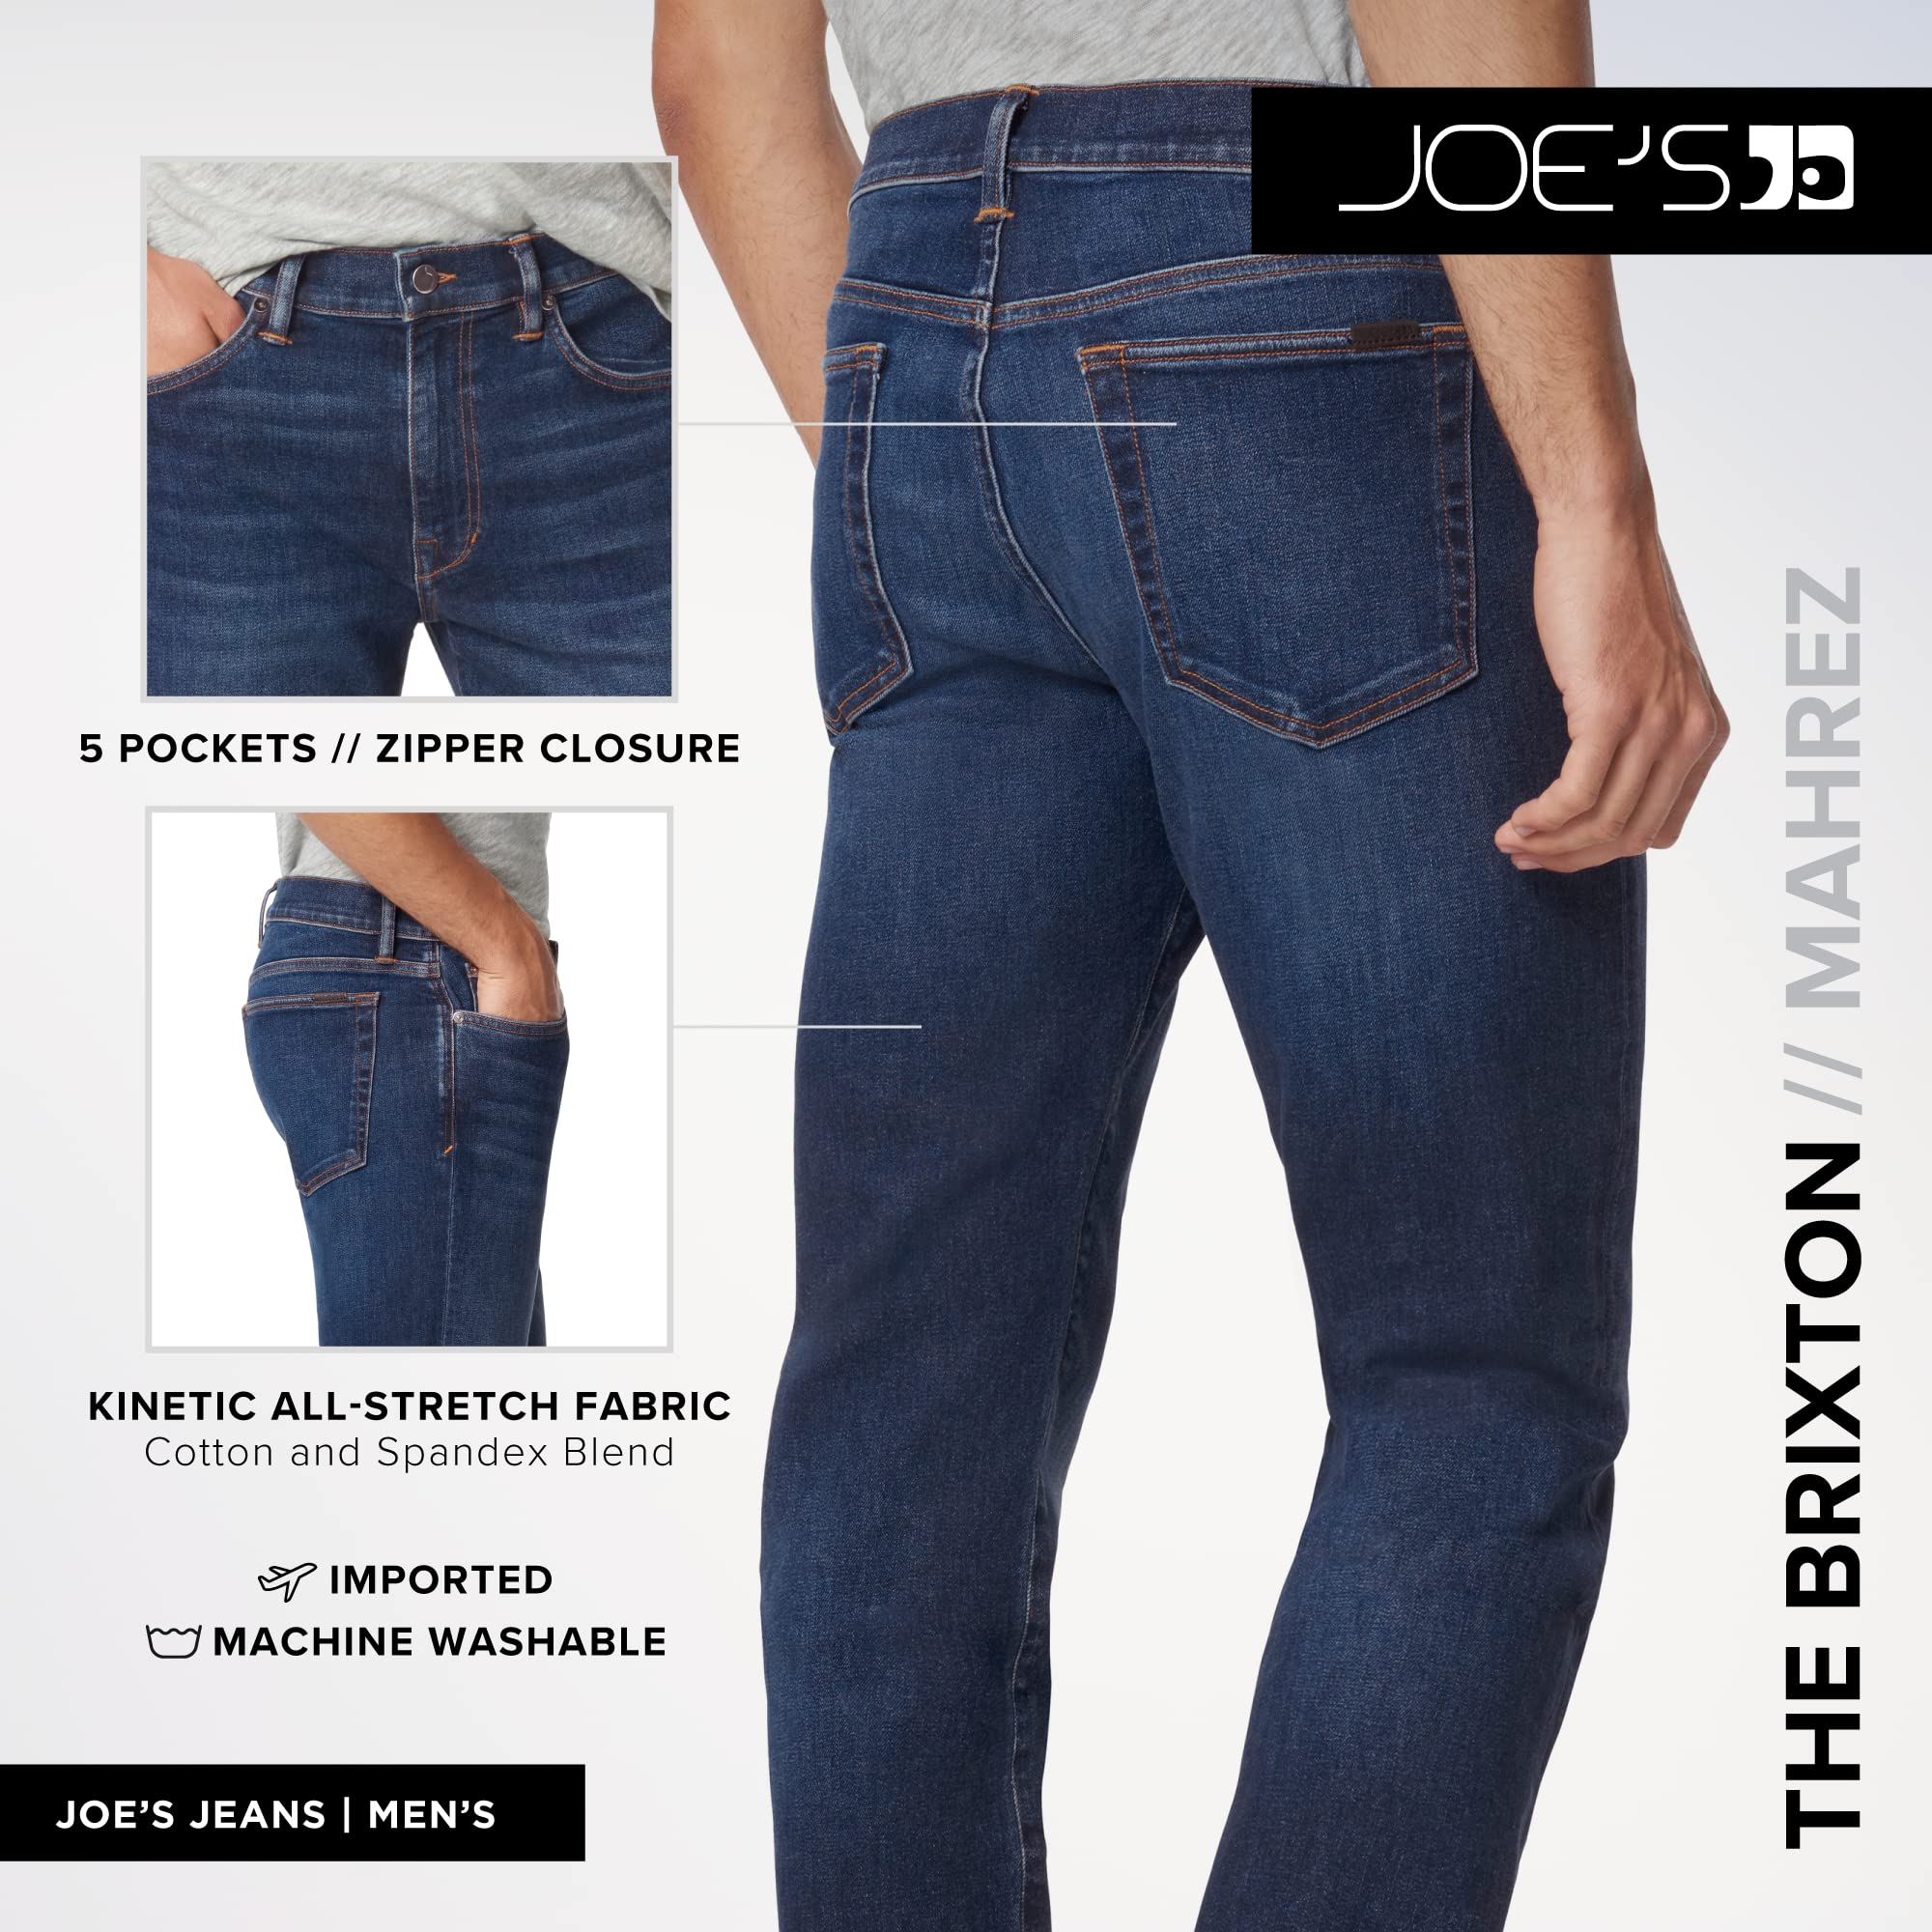 Joe's Jeans Men's The Brixton